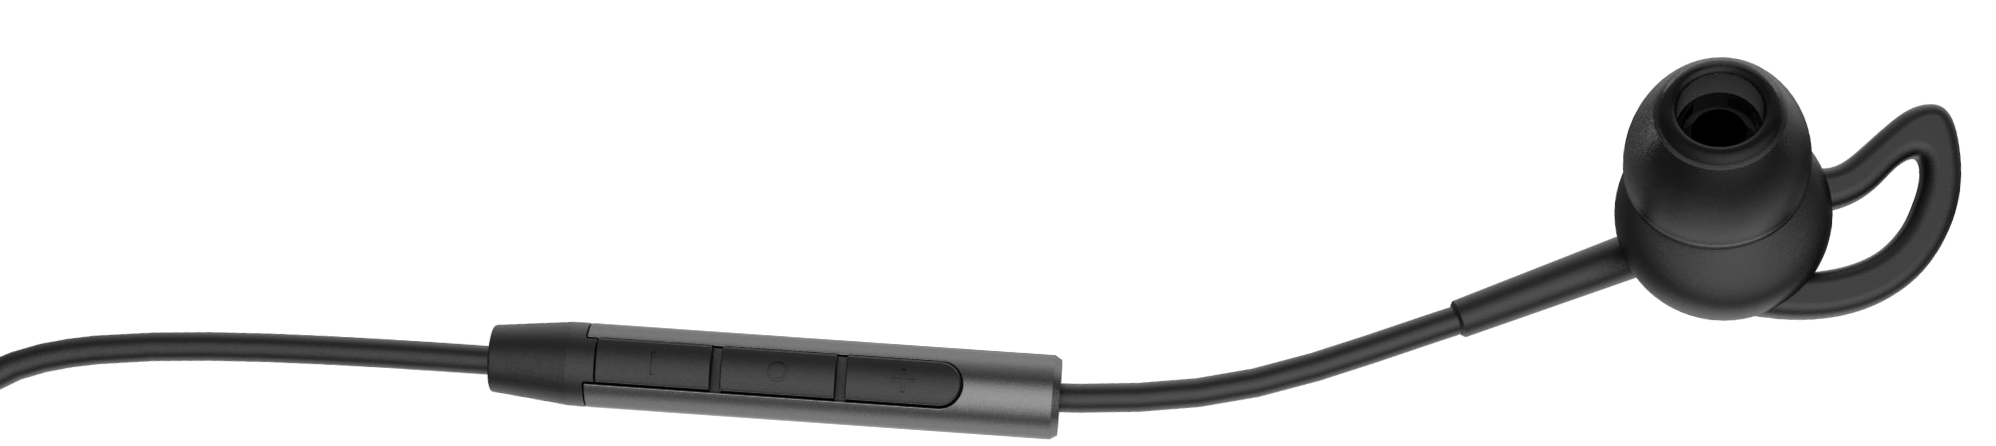 PlayGo N33-Wireless Neckband Accessories | PLAY Brand